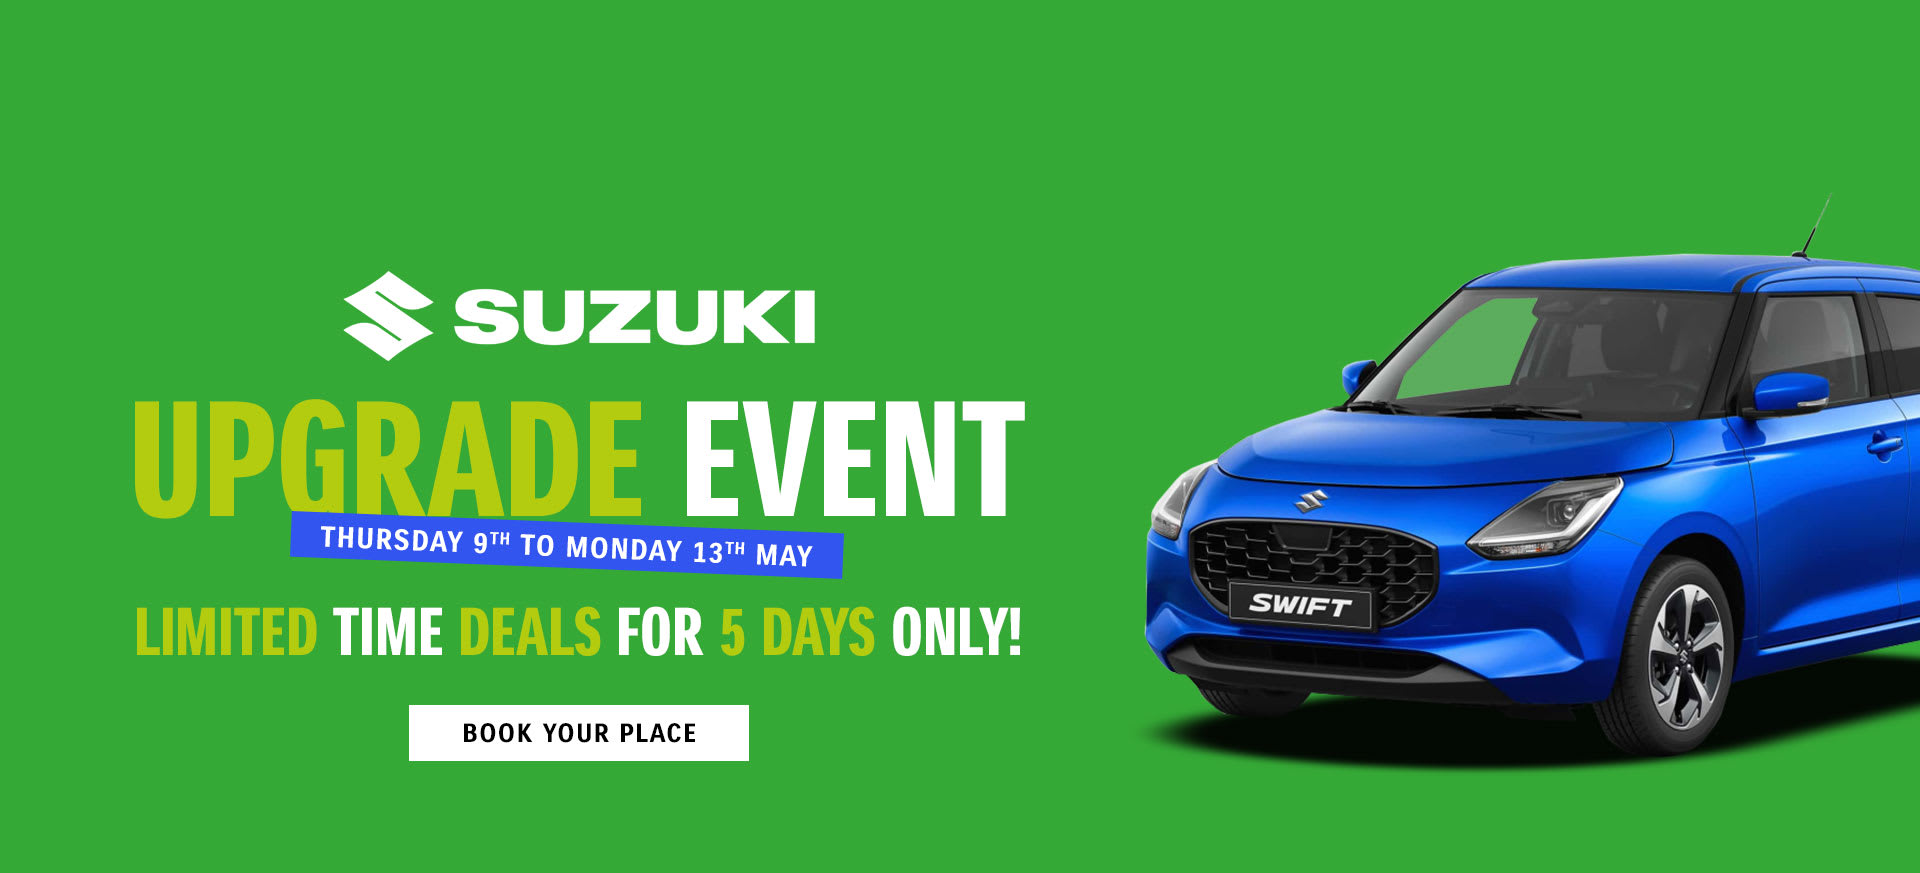 Suzuki Upgrade event